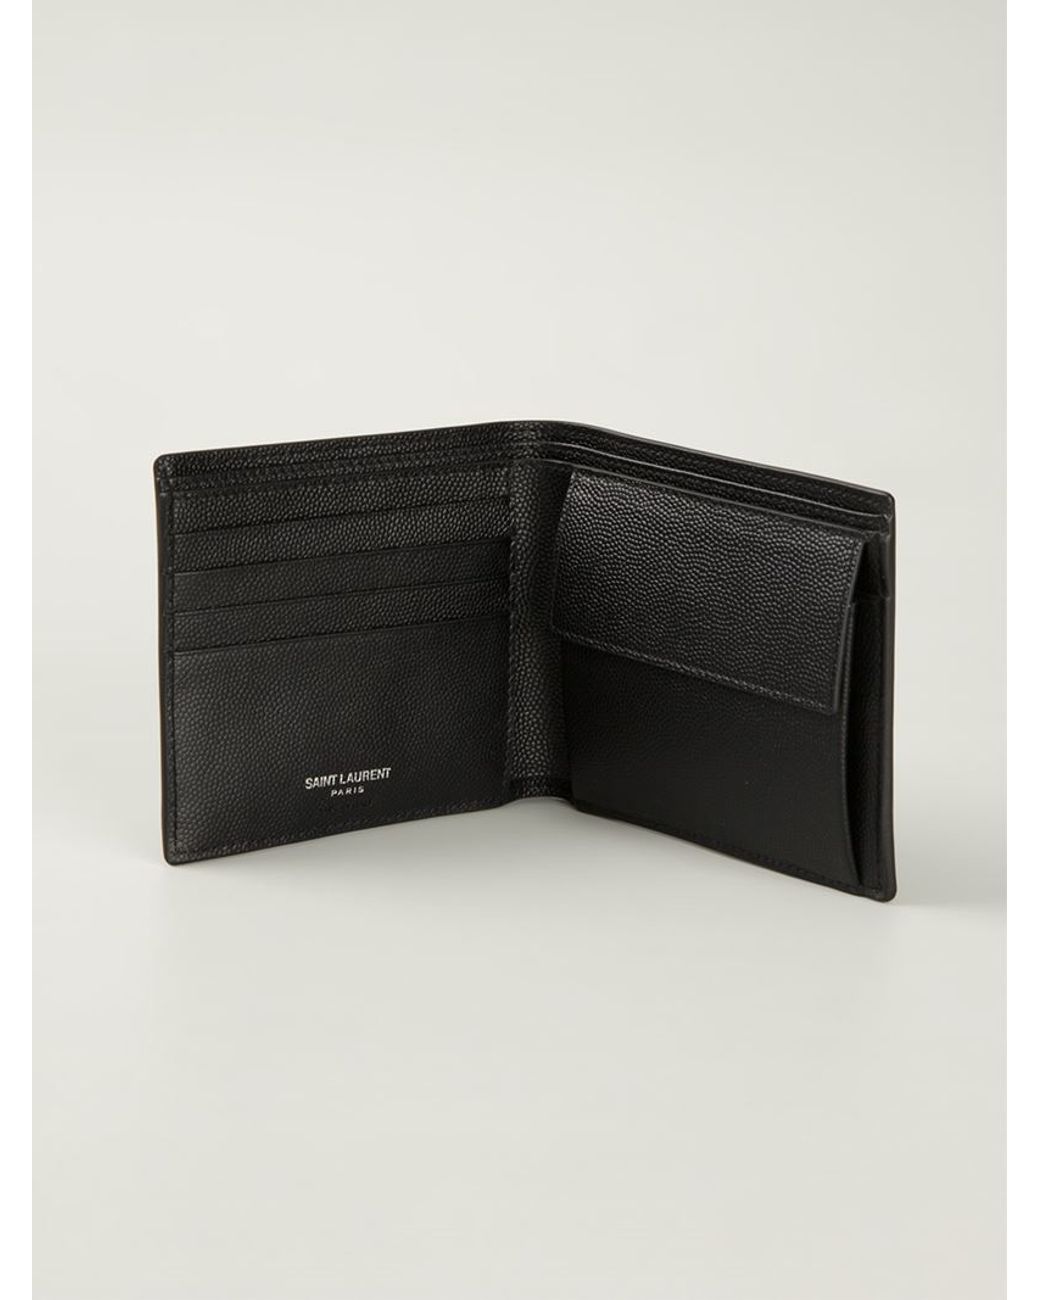 Saint Laurent Studded Wallet in Black for Men | Lyst